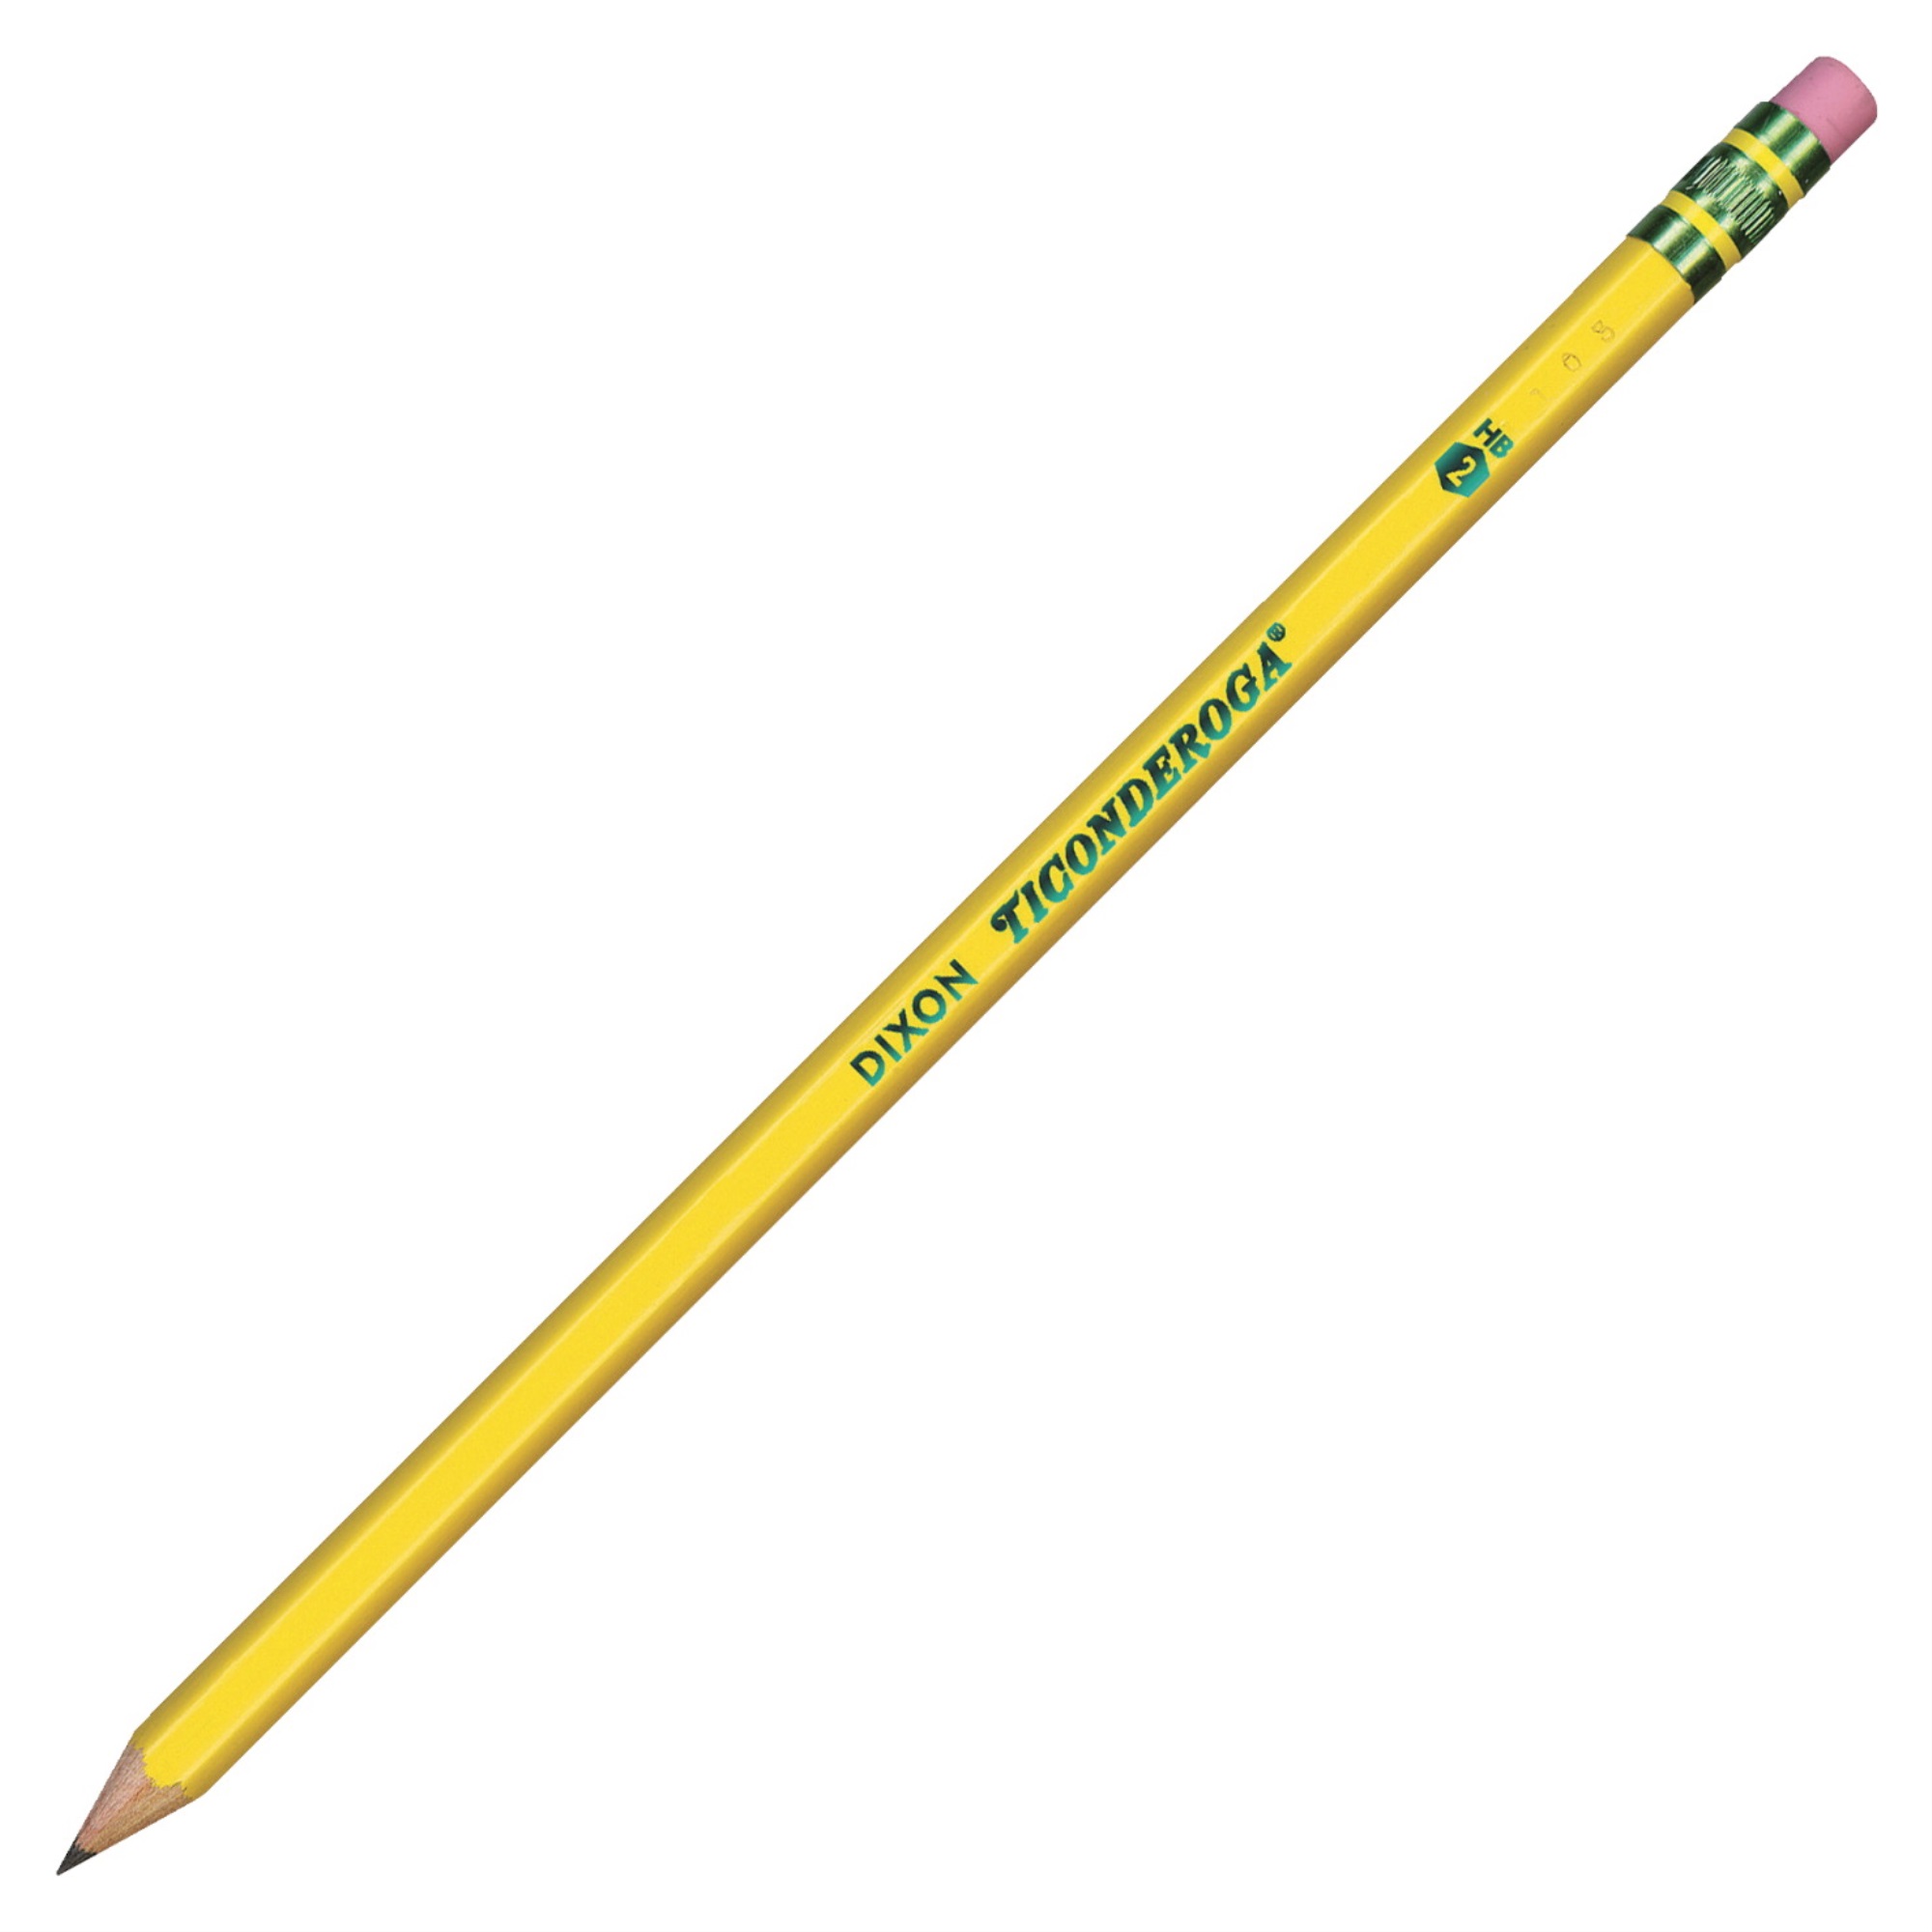 Original Ticonderoga Pencils, Pre-Sharpened, Box of 72